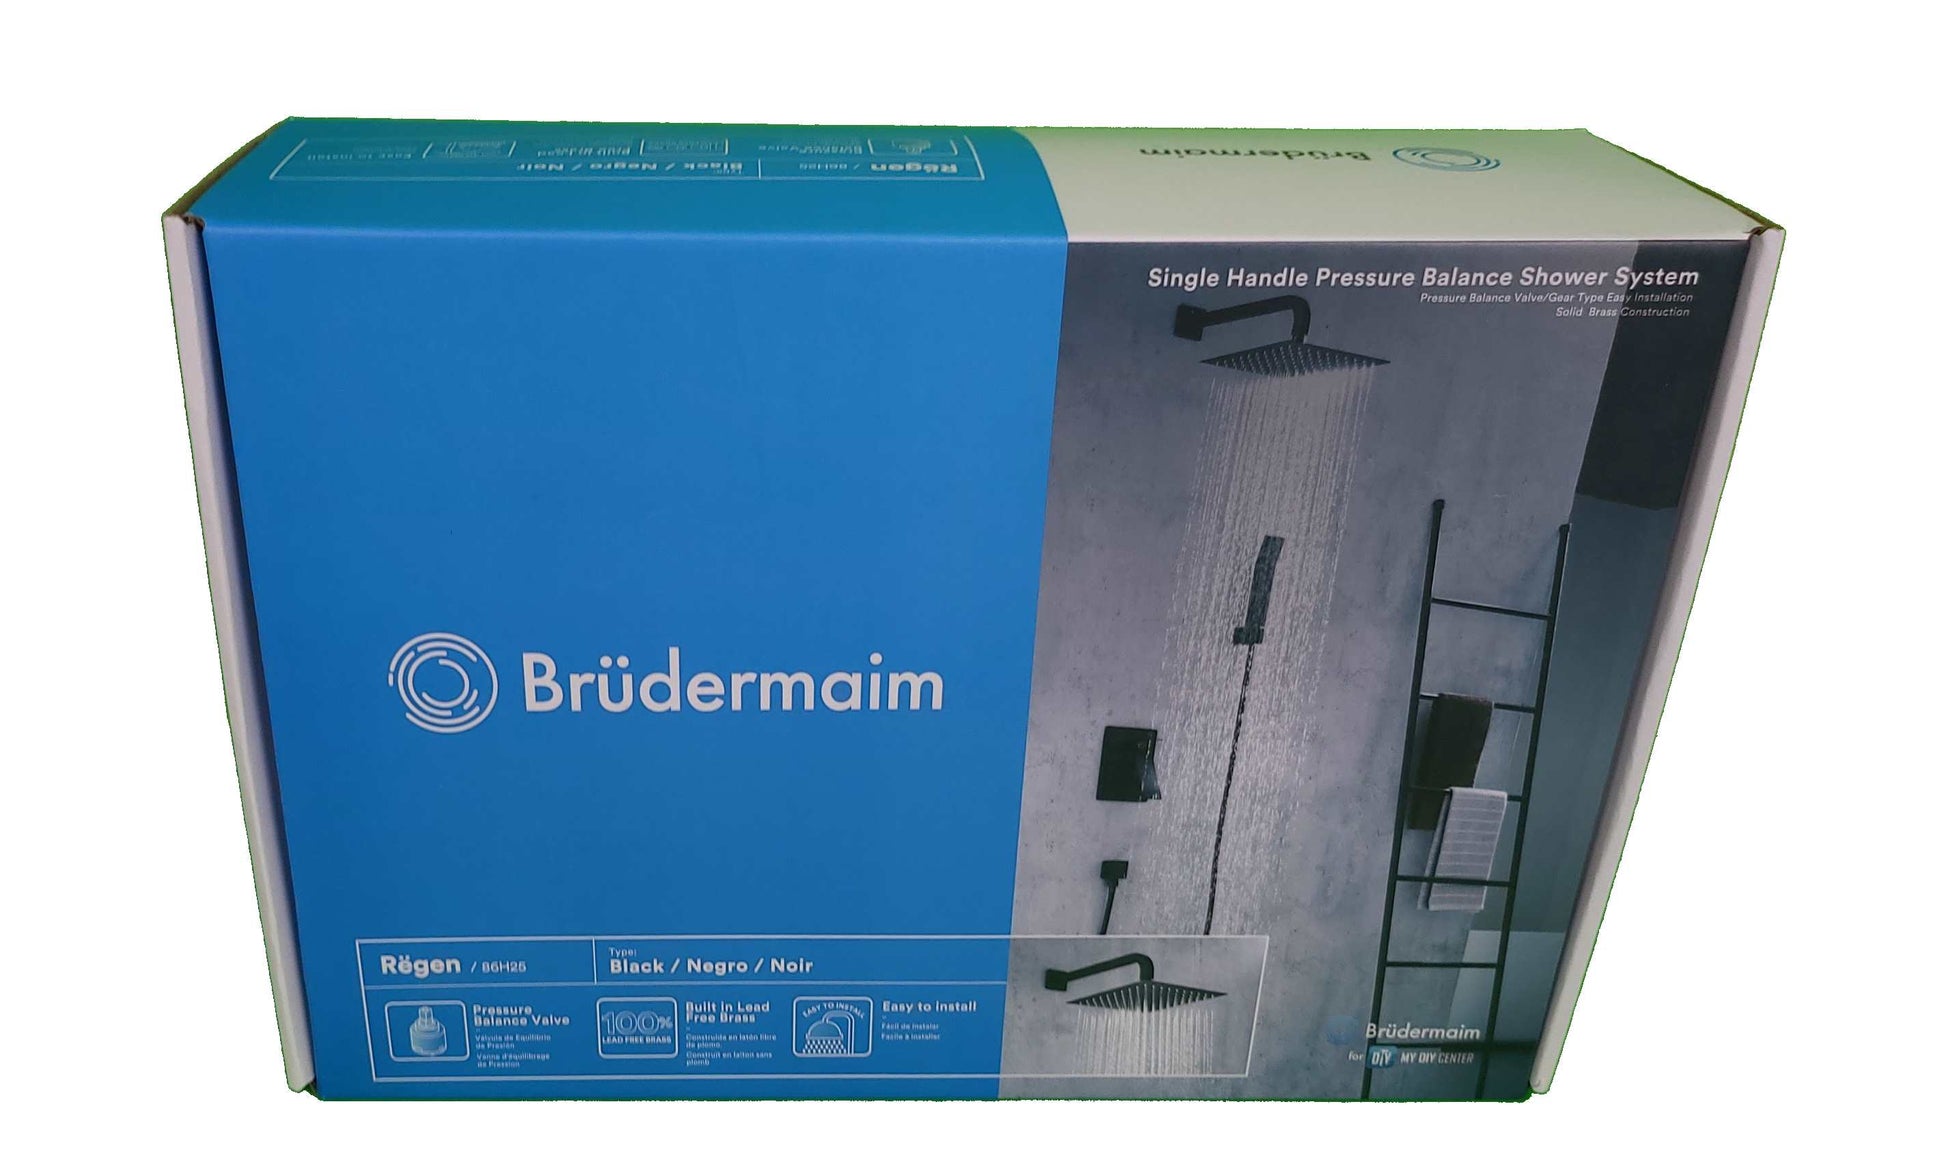 6pcs Box - Single Handle Pressure Balance Shower System - BRÜDERMAIM Rëgen- Matte Black - Lead Free Brass - cUPC Certified - Ceramic Cartridge